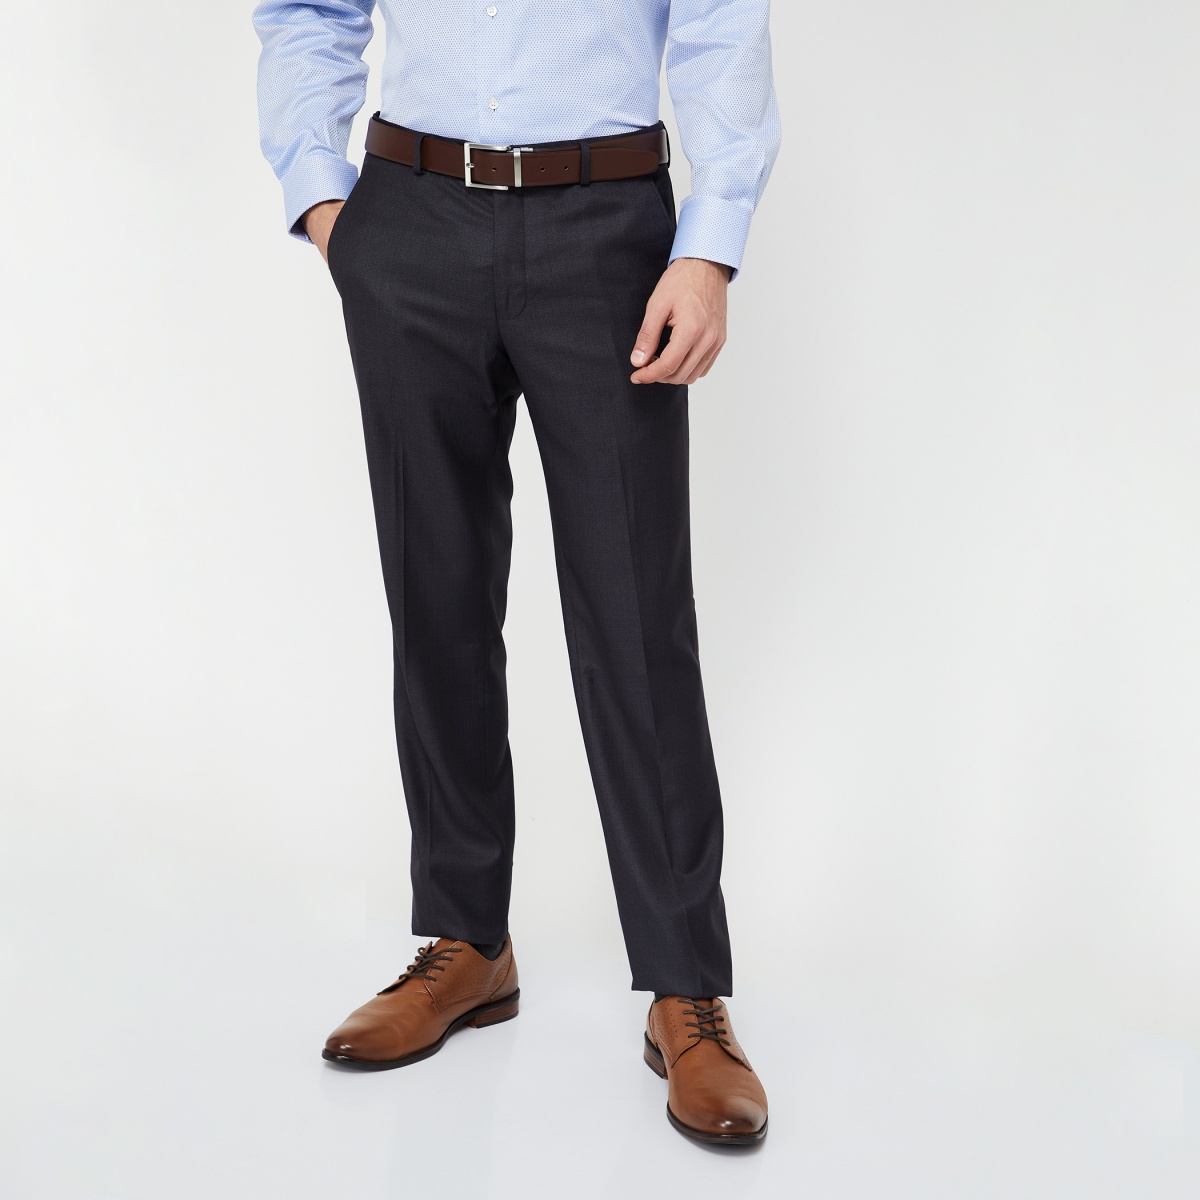 Buy Van Heusen Men's Slim Fit Formal Trousers  (VHTF1M51944_Blue_112/44Wx34L) at Amazon.in